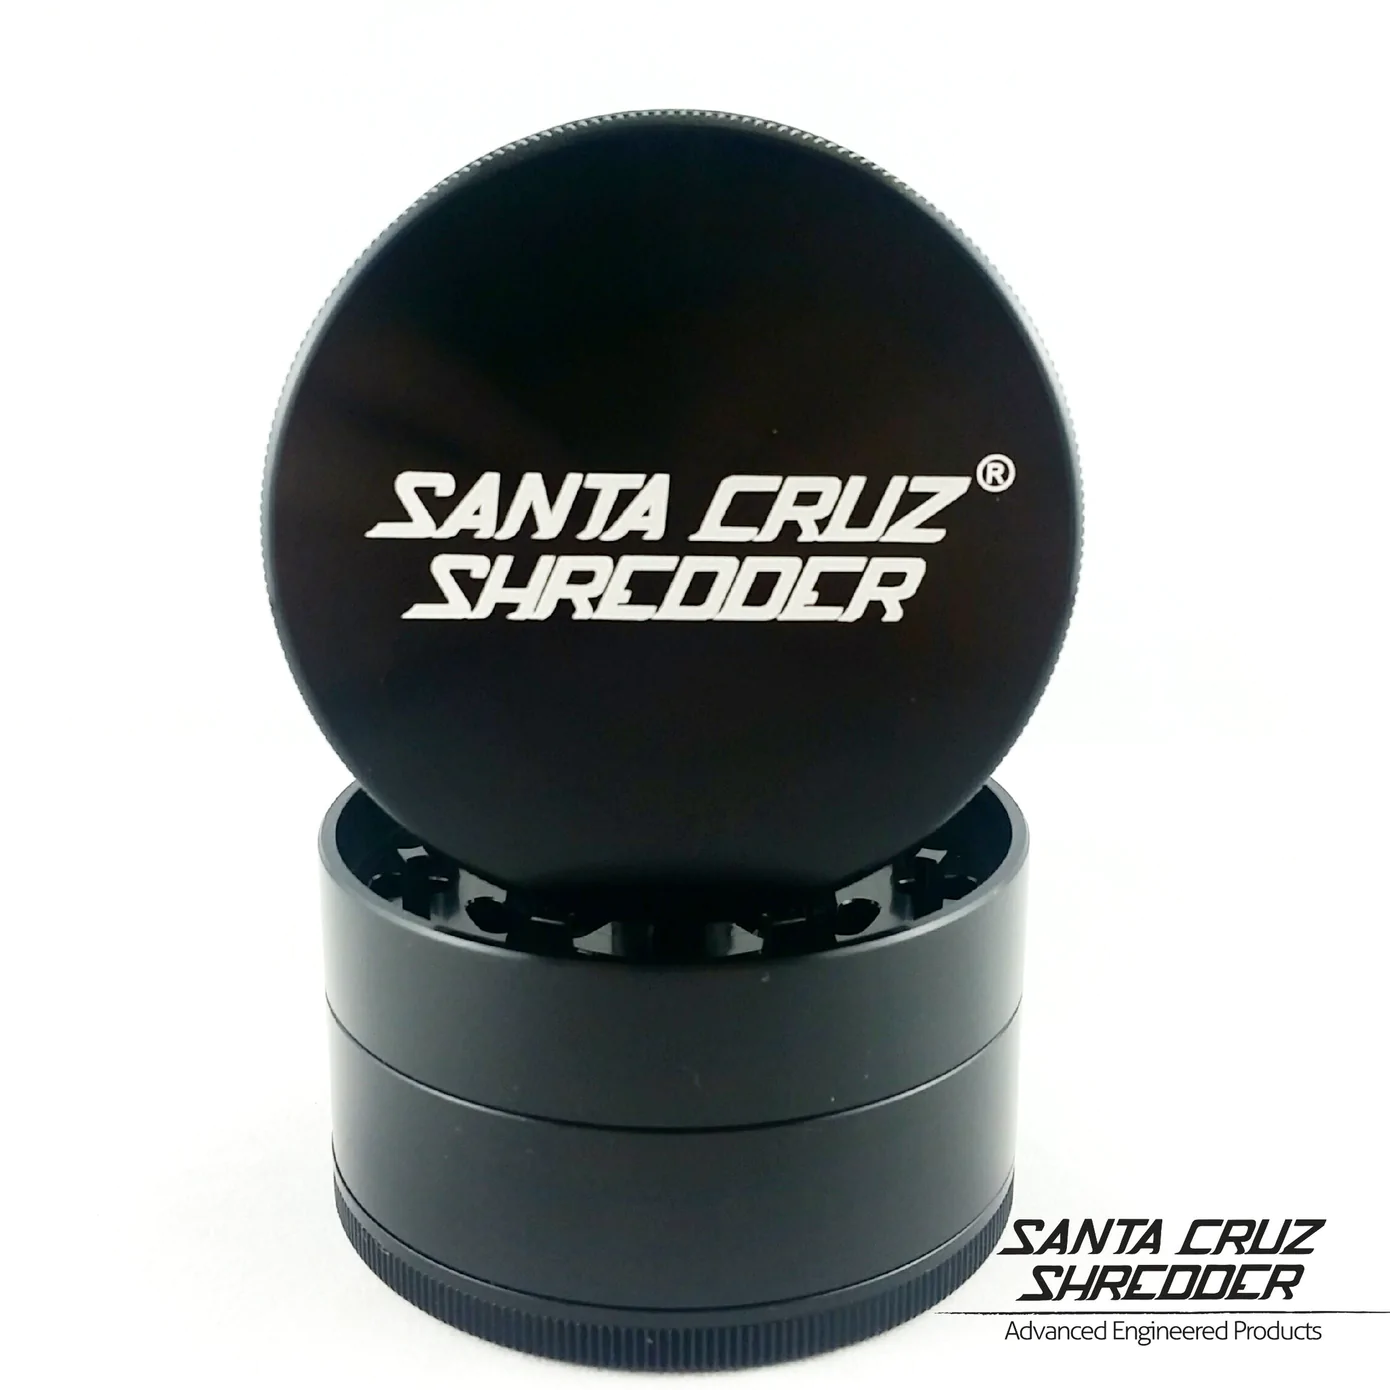 Santa Cruz Shredder 4-Piece Large Grinder